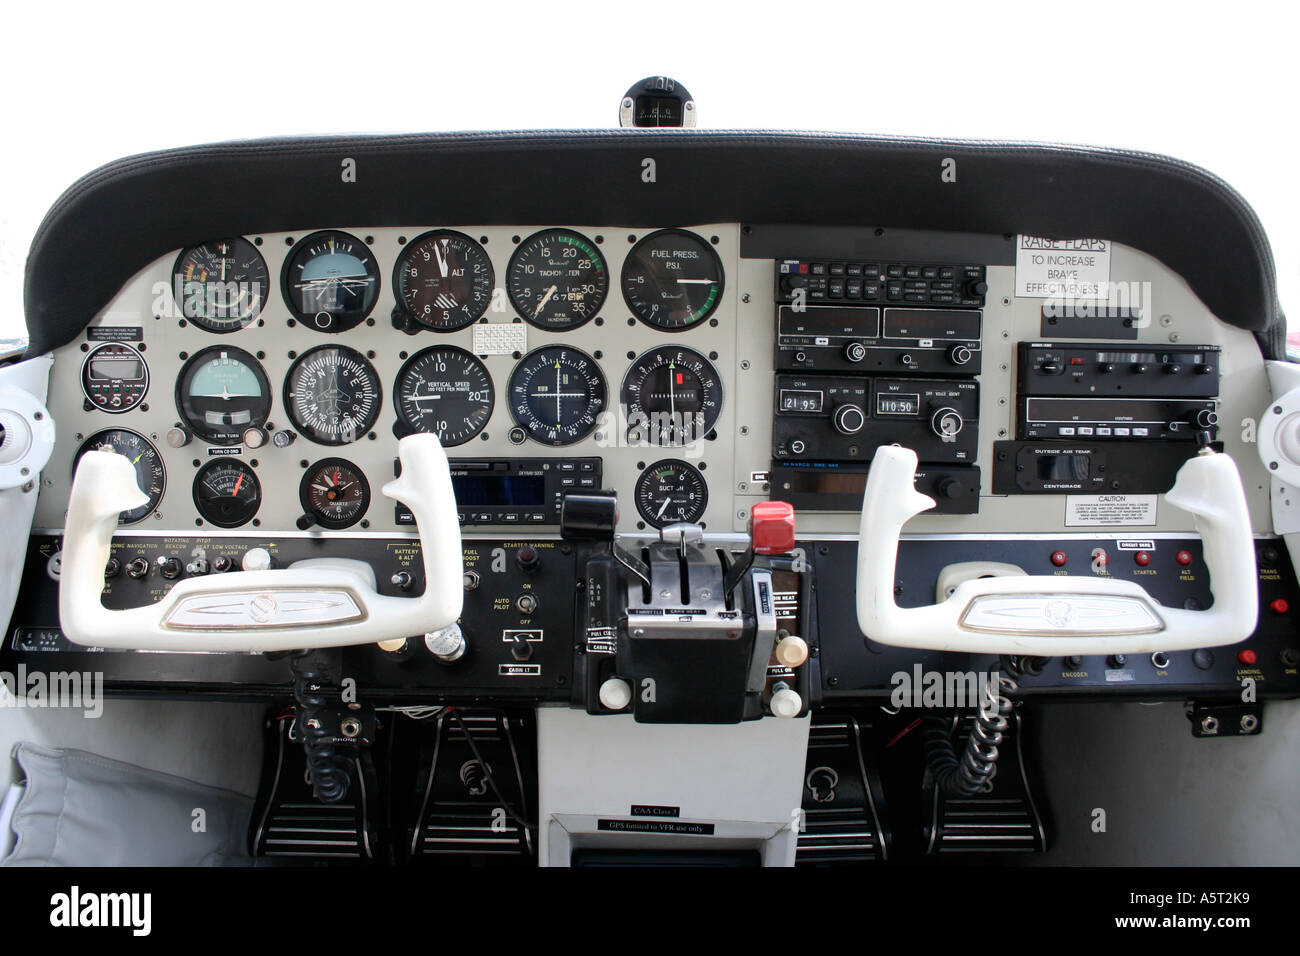 Beechcraft light aircraft interior. Navigation instruments, controls, clocks and dials. Avionics. Single engine aeroplane. Stock Photo